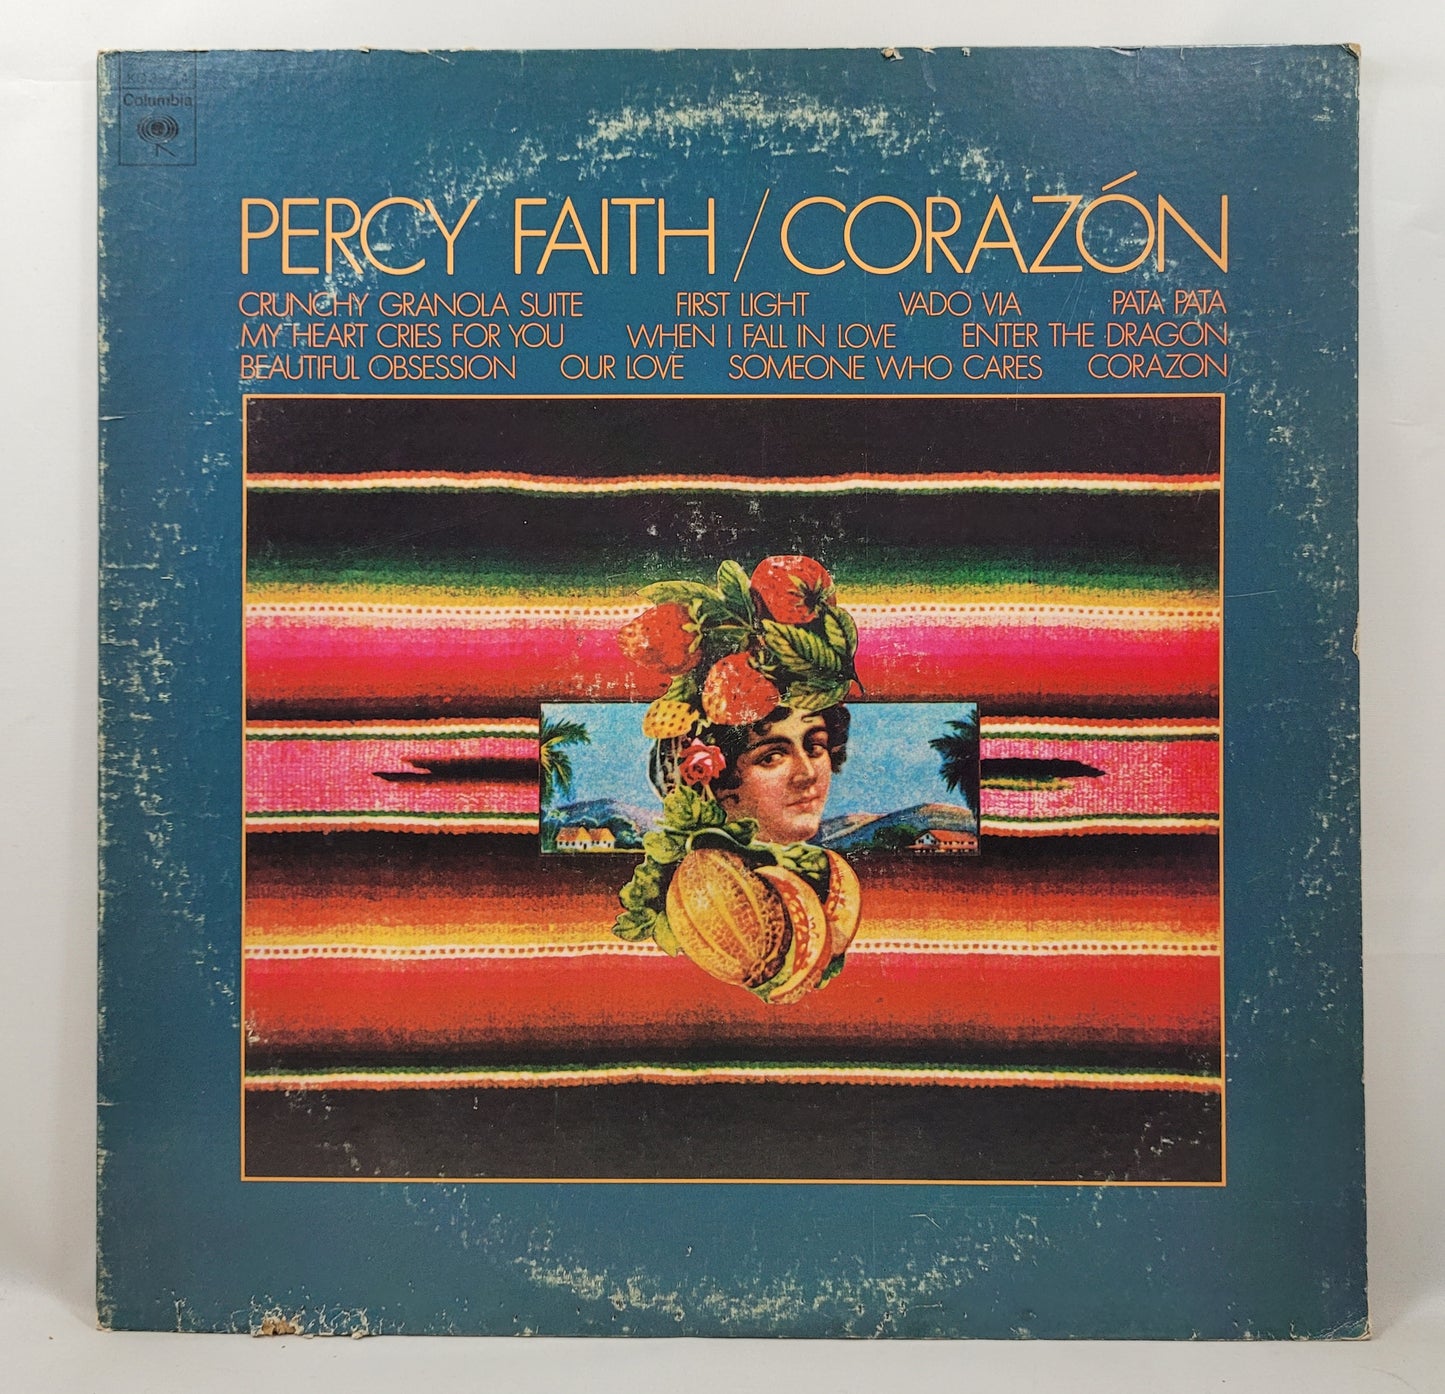 Percy Faith & His Orchestra - Corazón [1973 Used Vinyl Record LP]